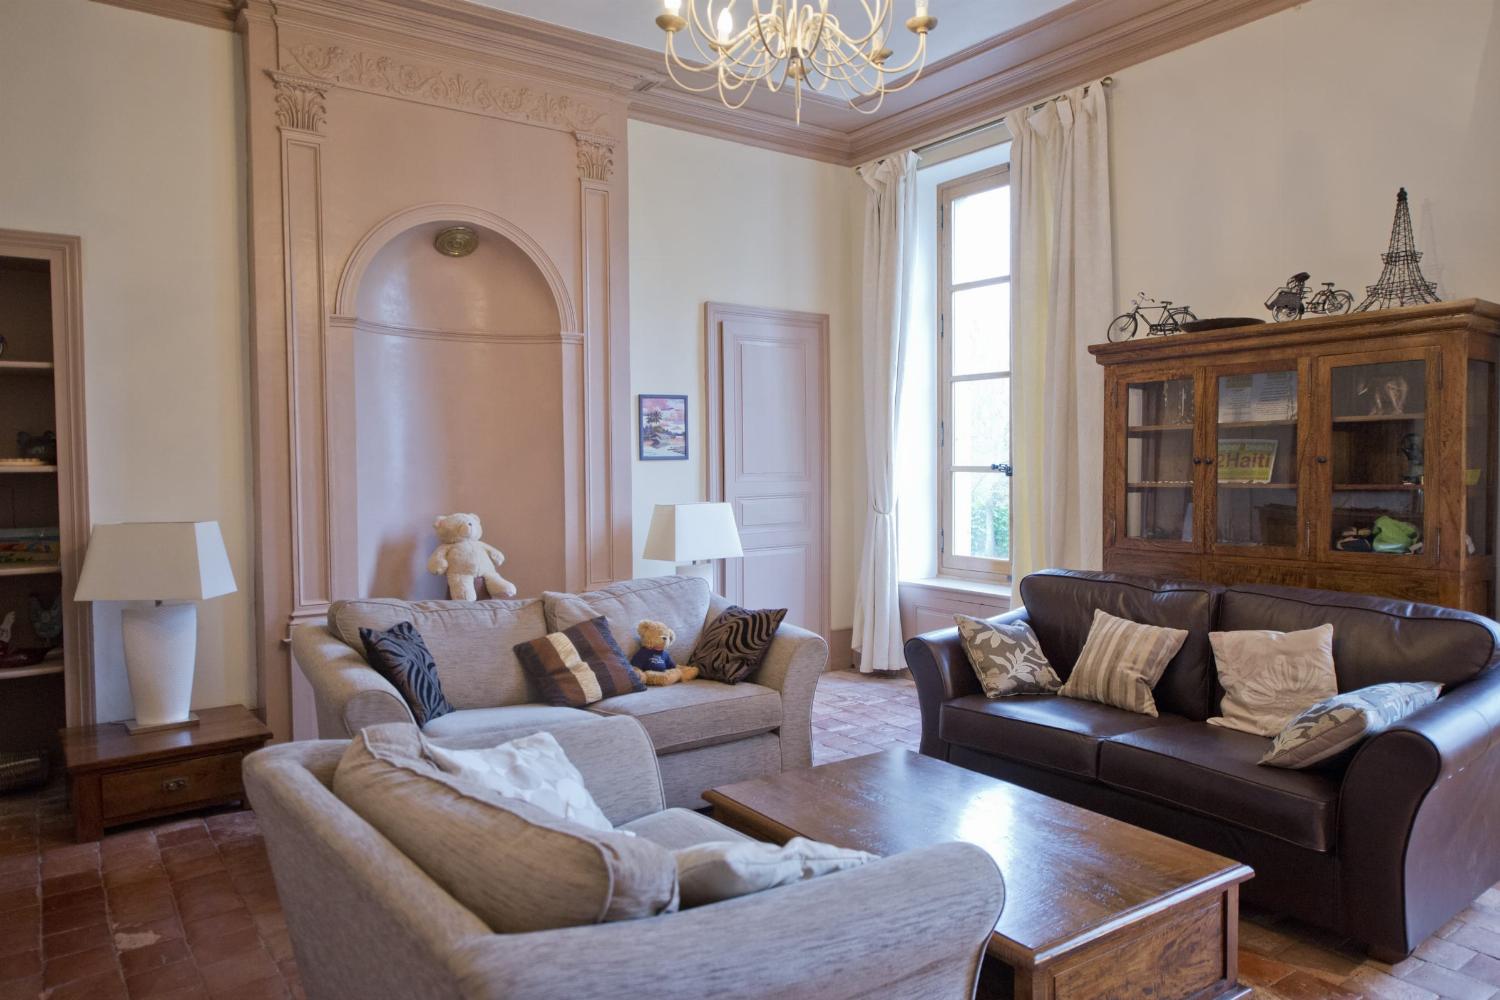 Living room | Rental château in Loire